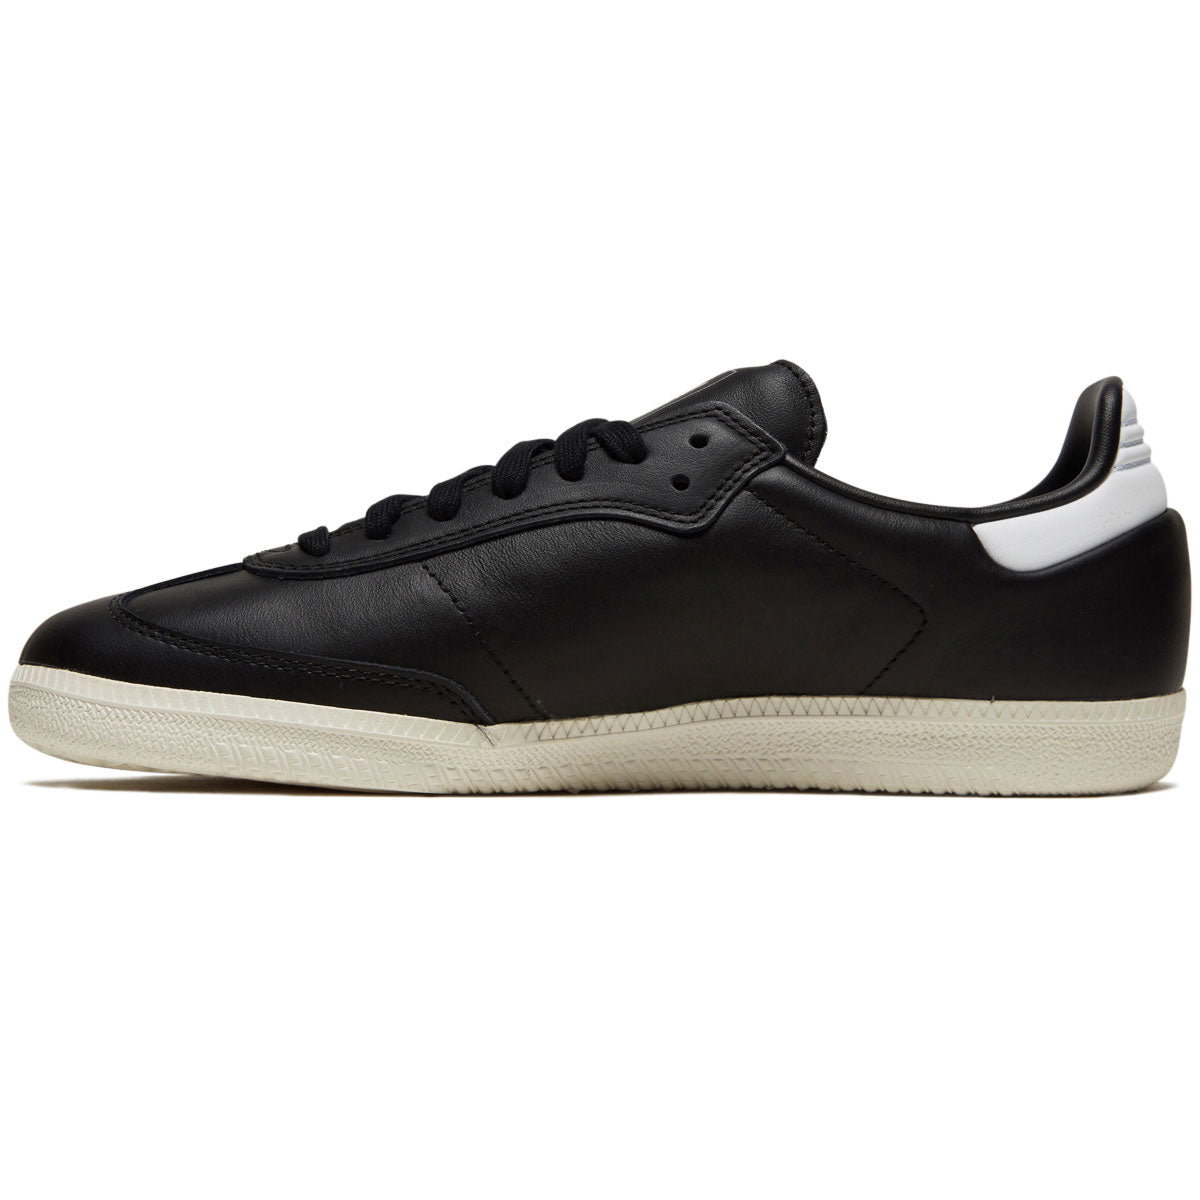 Adidas Samba ADV Shoes - Core Black/Grey/Chalk White image 2